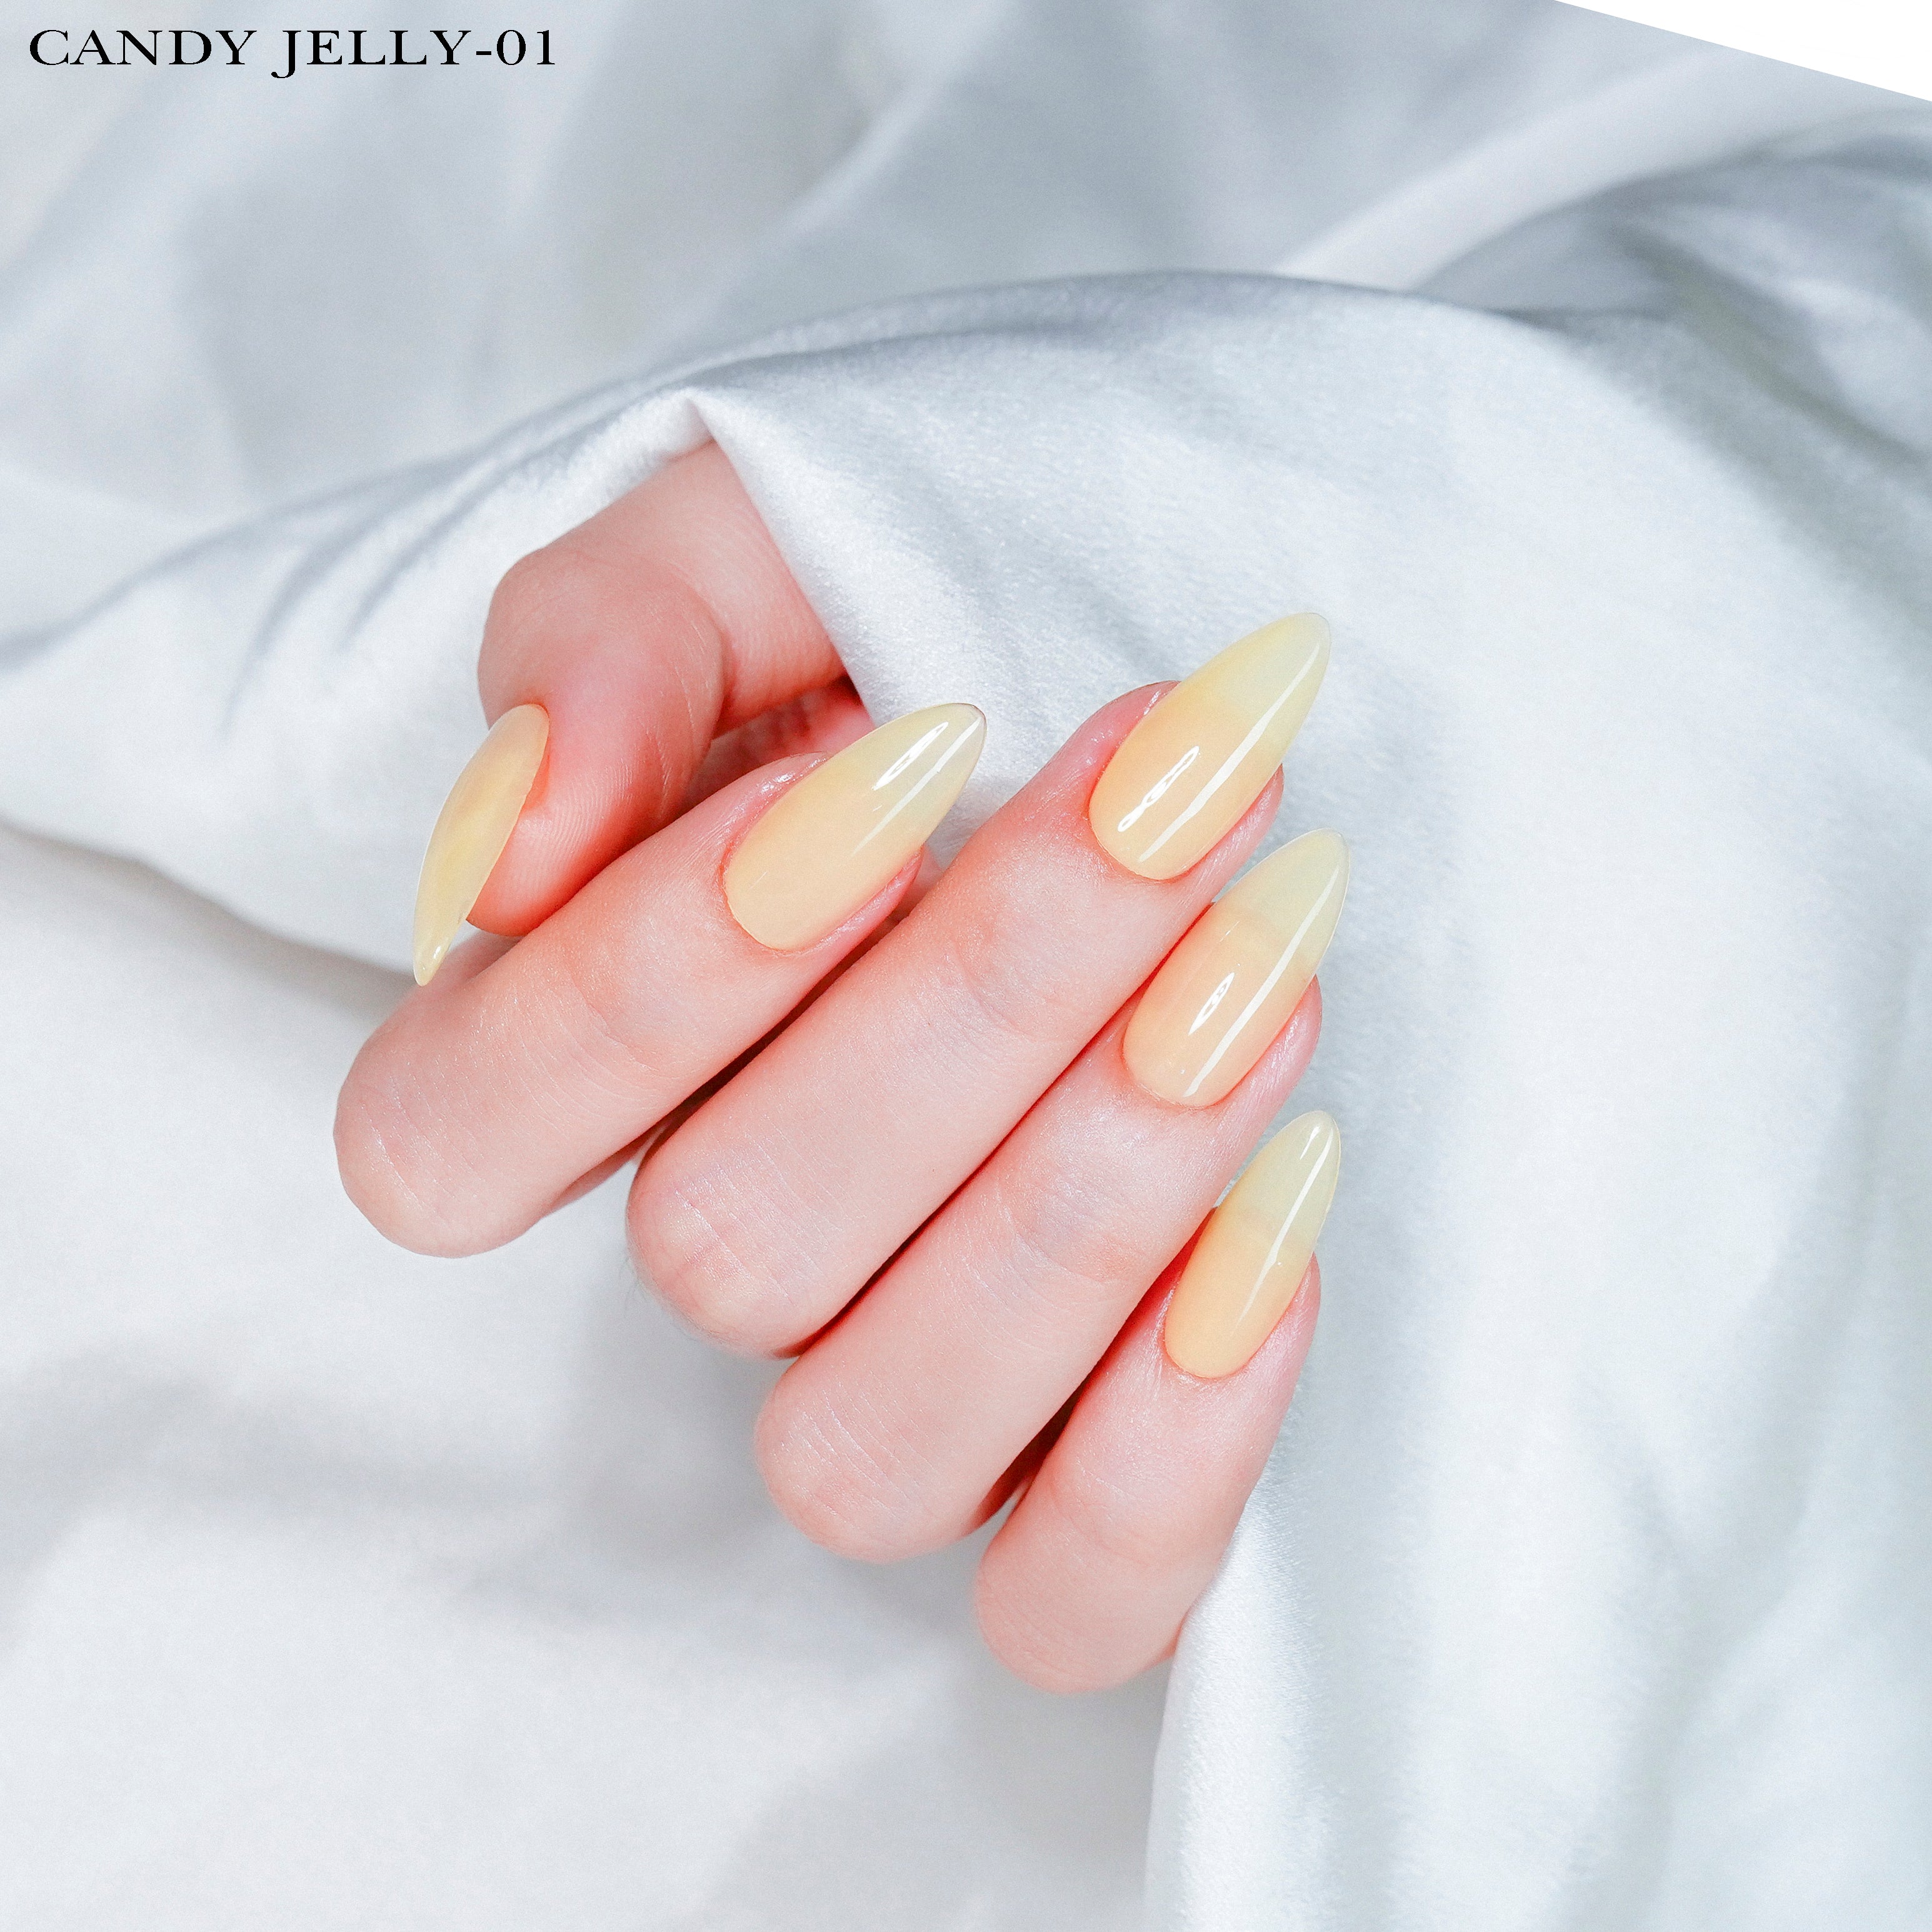 LAVIS Set 24 Color - Gel Polish 0.5oz - Candy Jelly Collection